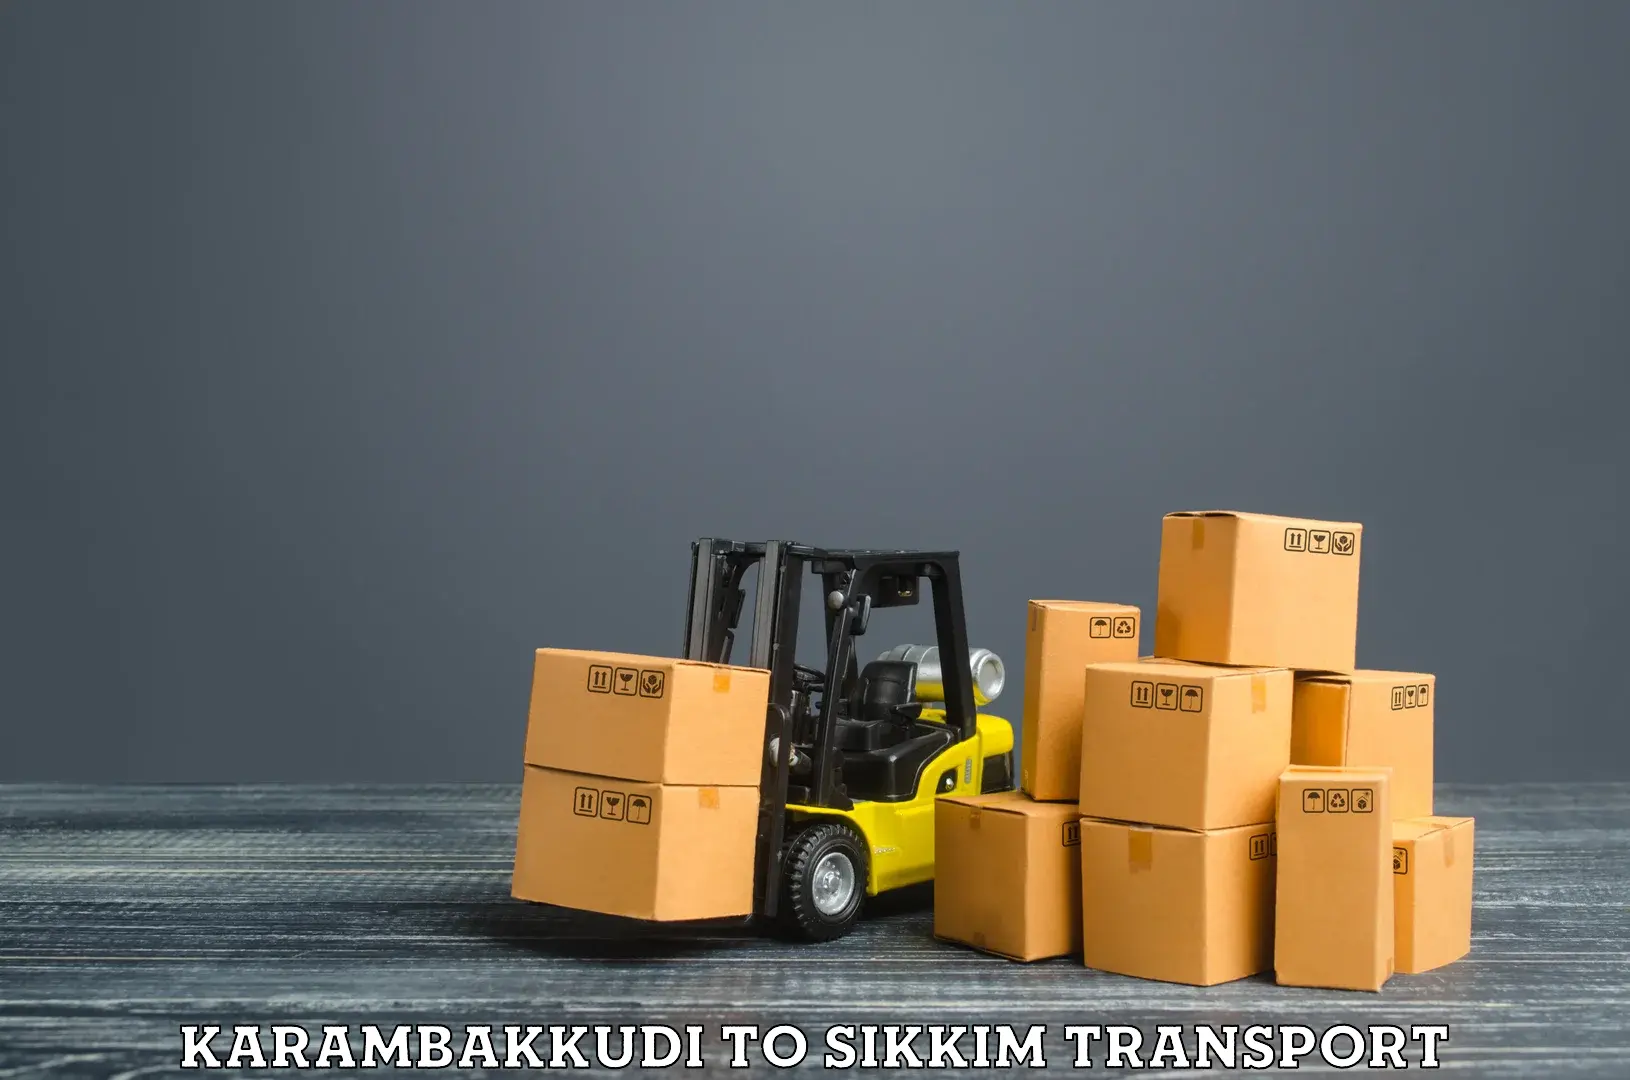 Shipping partner Karambakkudi to West Sikkim